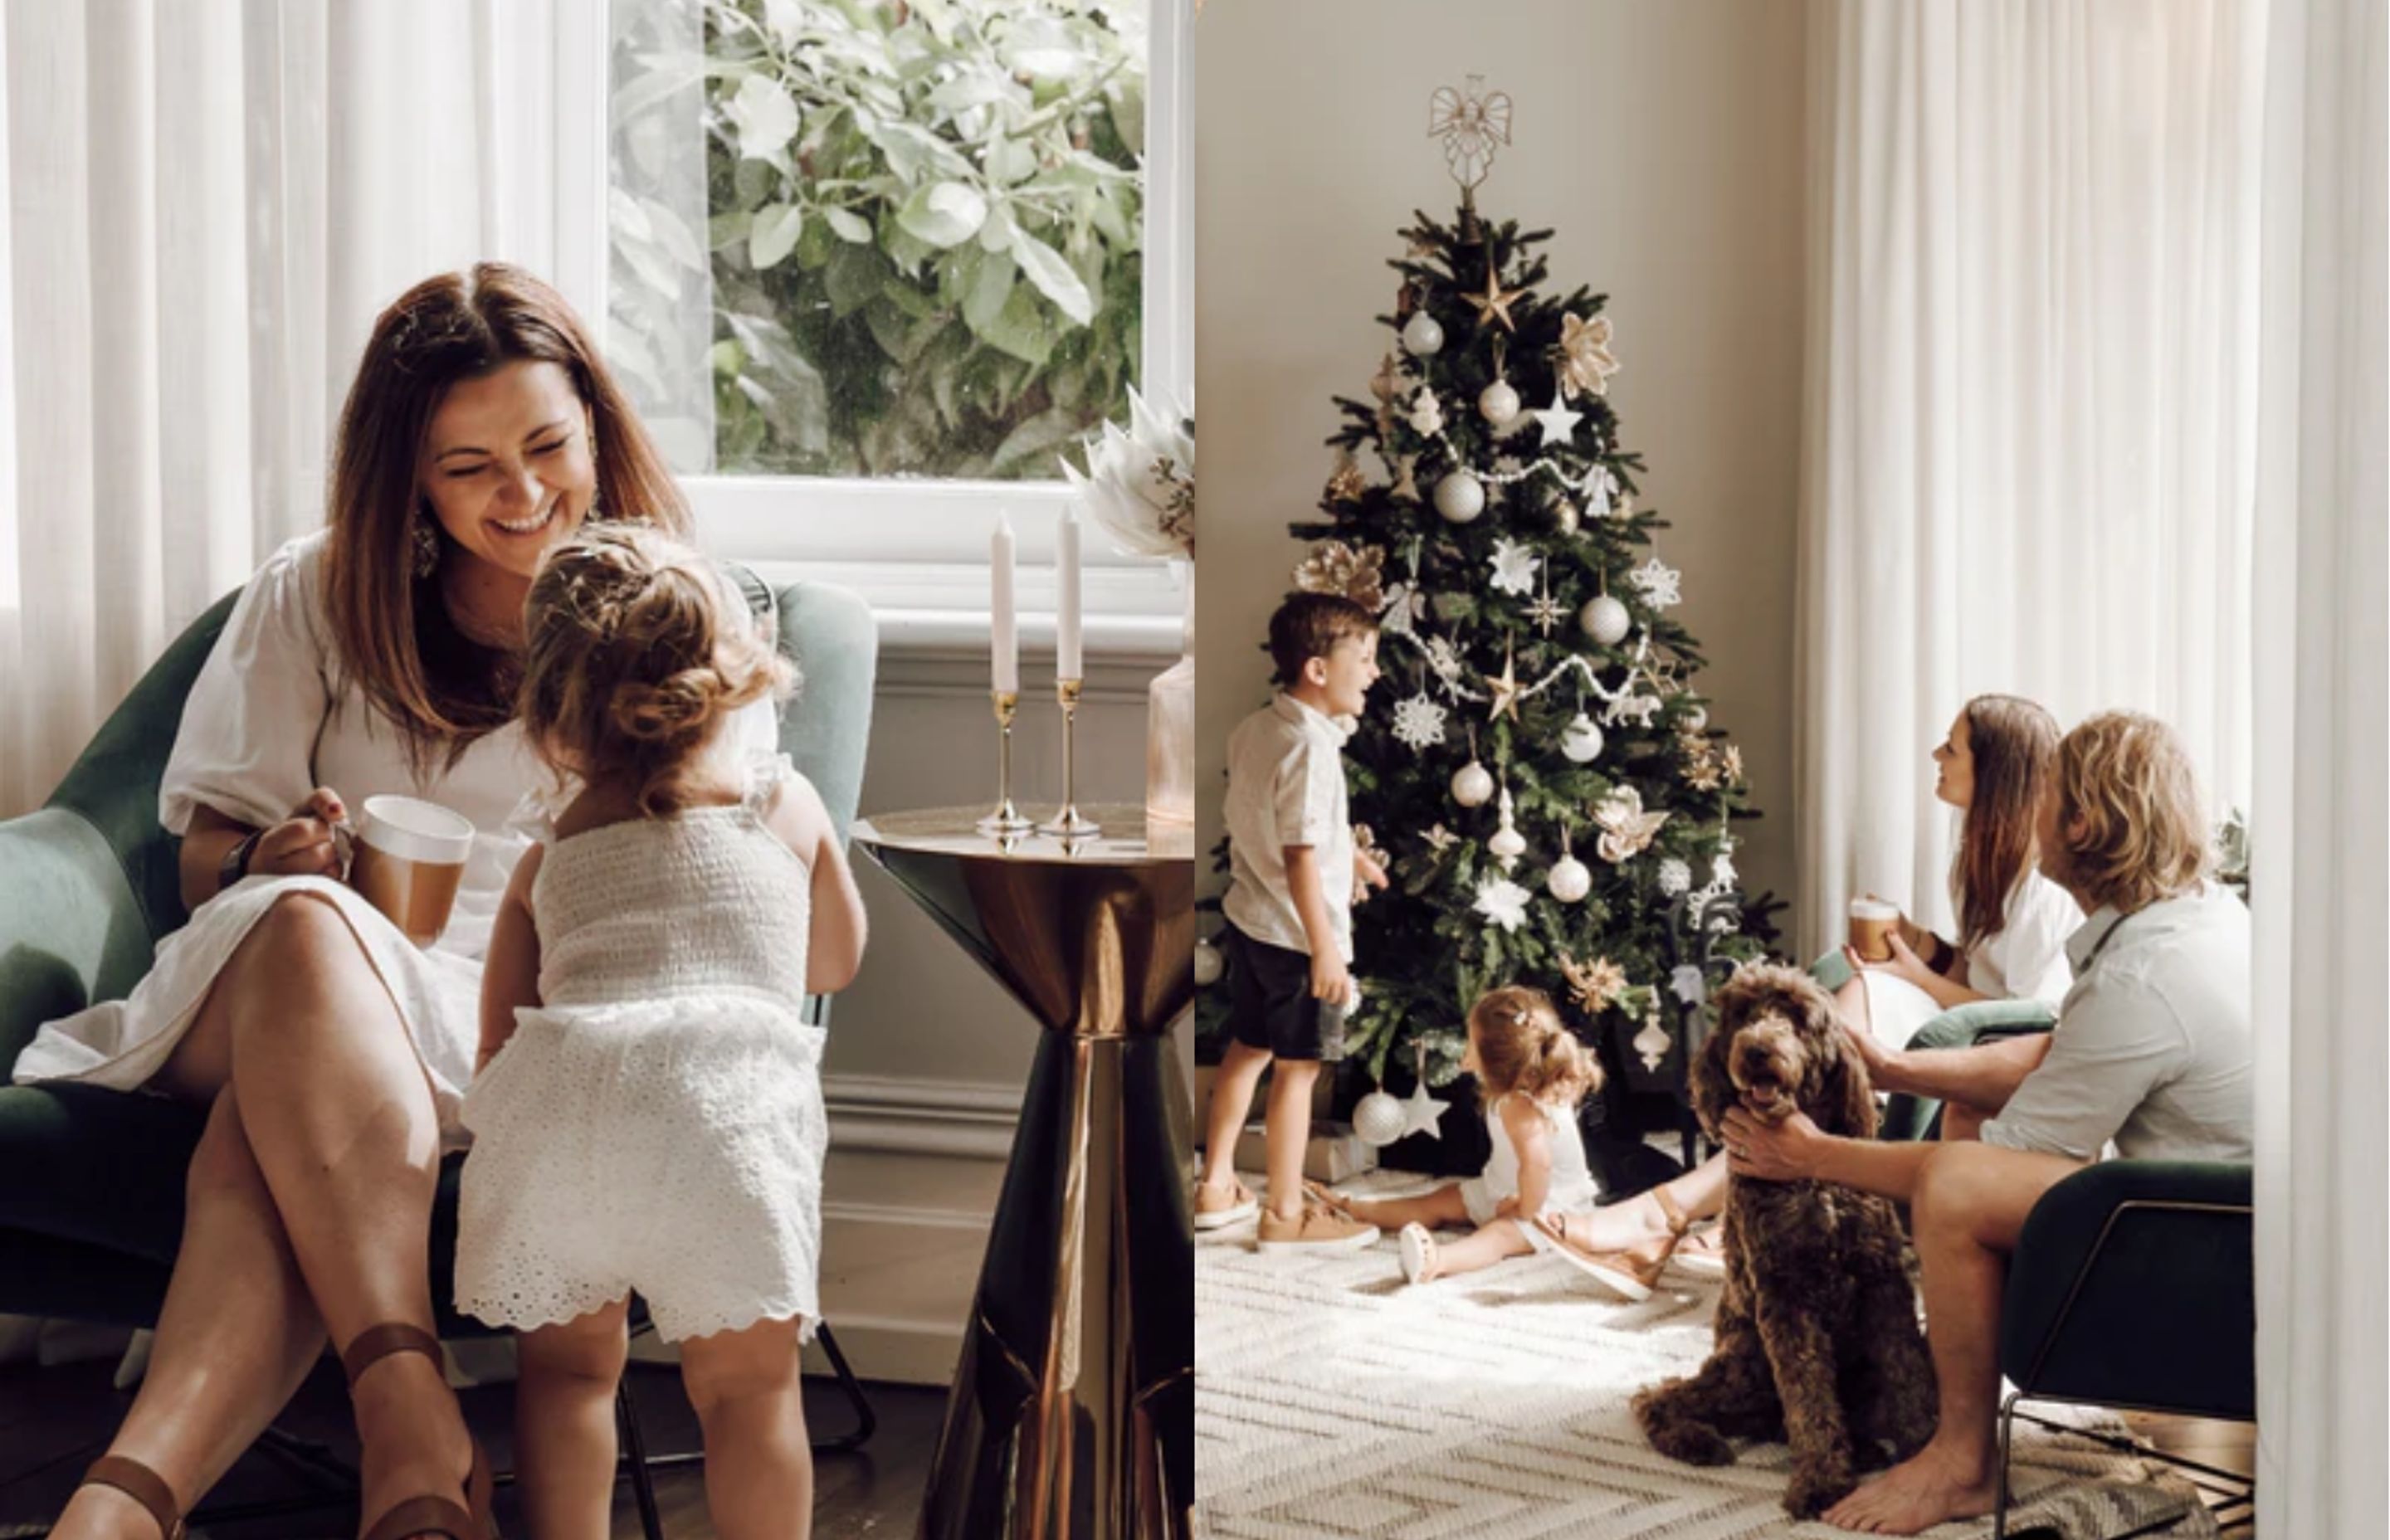 Christmas styling tips from awarded interior designer Lydia Maskiell